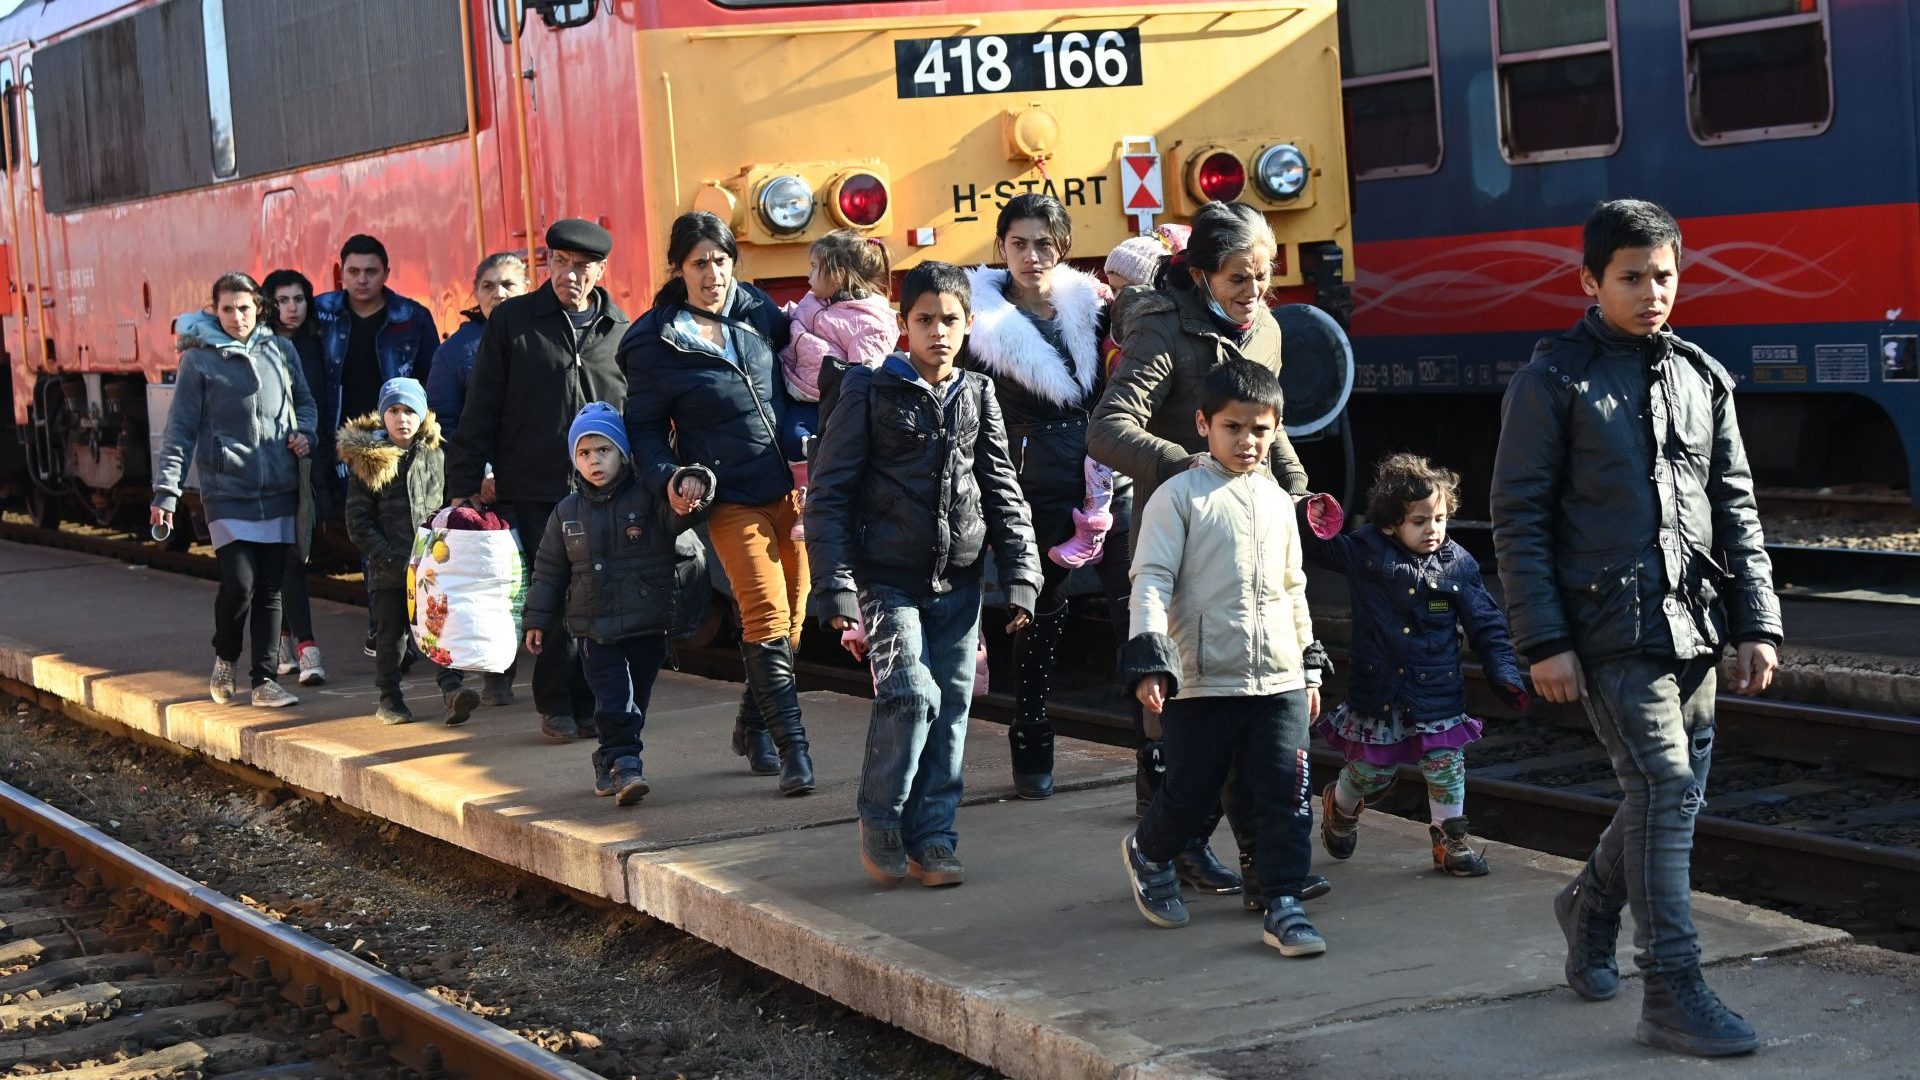 Ukrainian refugees arrive from their homeland at Zahonyi railway station close to the Hungarian-Ukrainian border. Photo: ATTILA KISBENEDEK/AFP via Getty Images